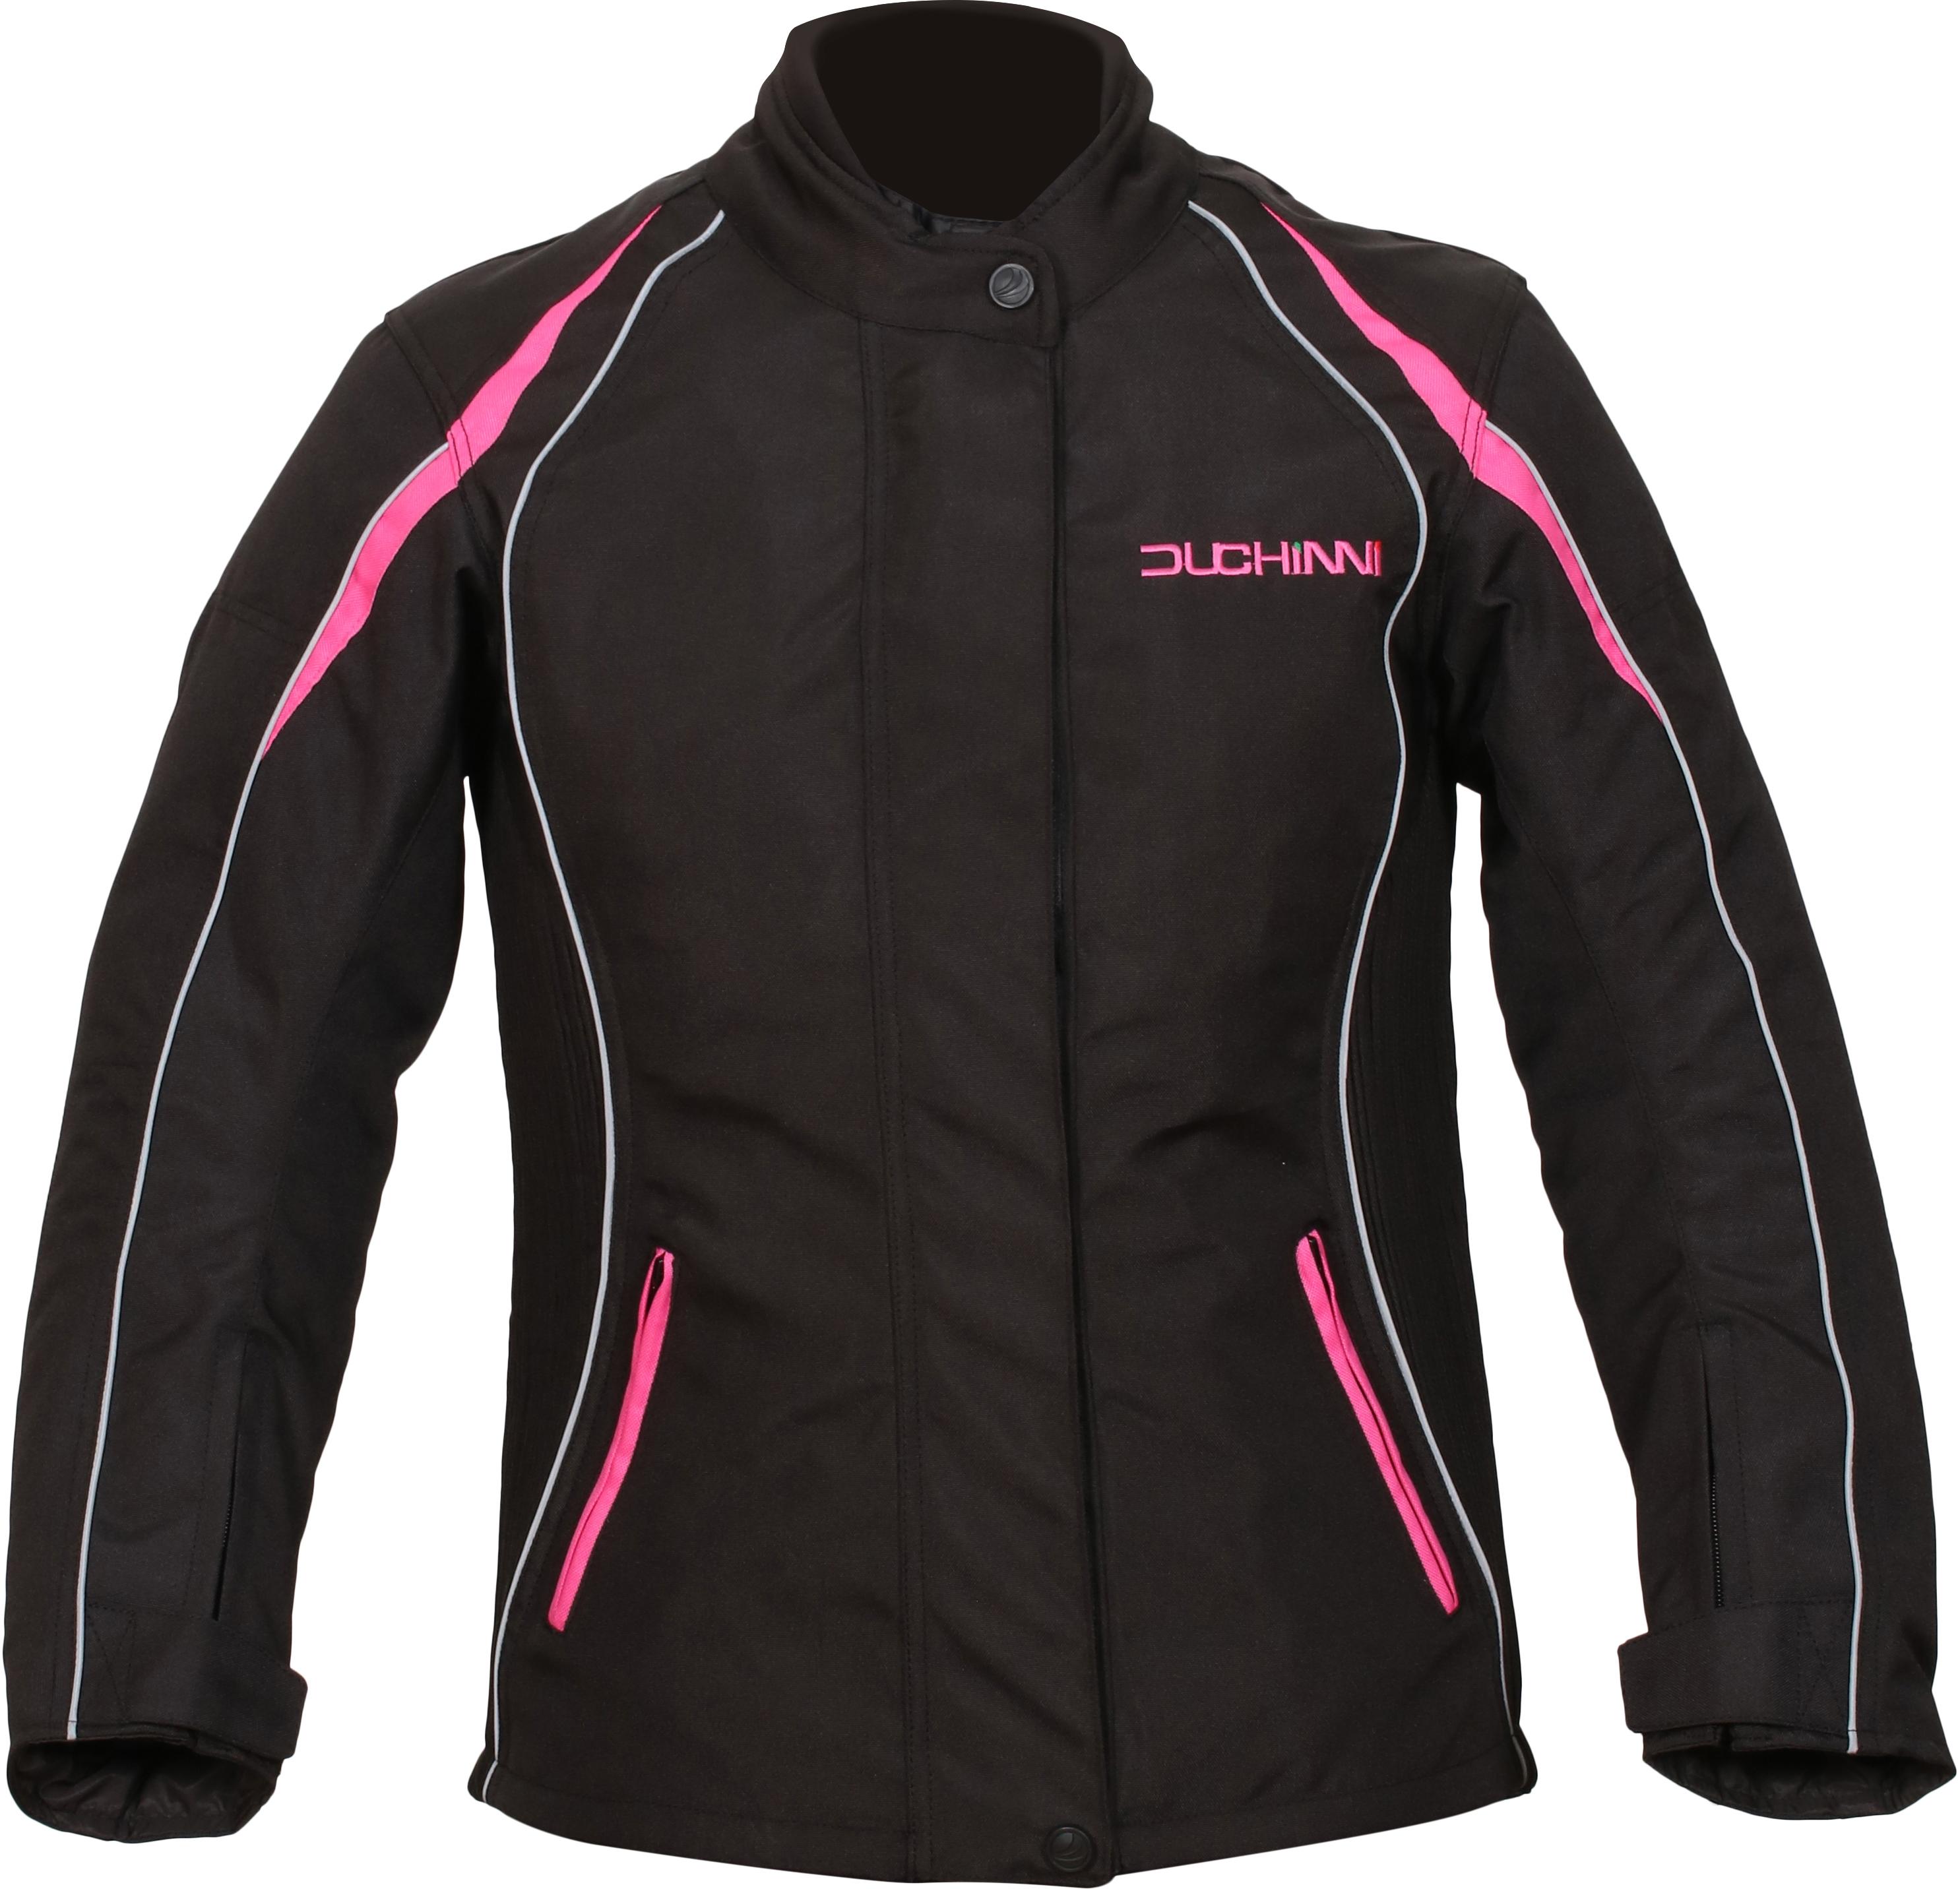 Duchinni Vienna Ladies Motorcycle Jacket - Black And Pink, 16